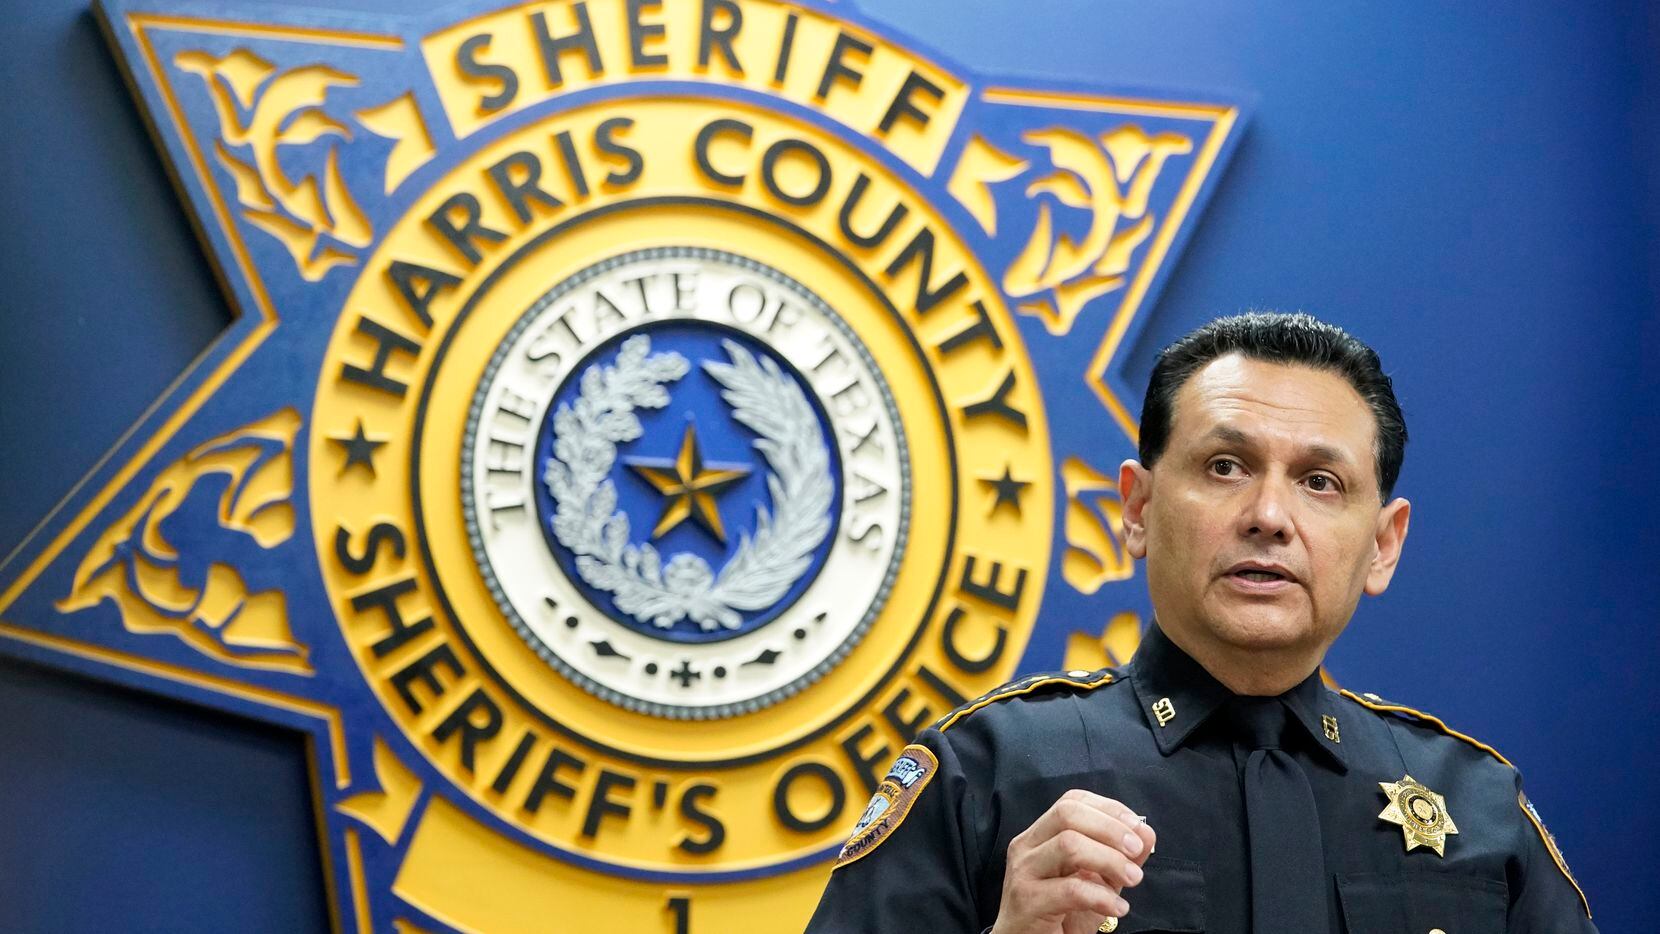 Darren Almendarez, 51, was killed Thursday night following an exchange of gunfire in a...